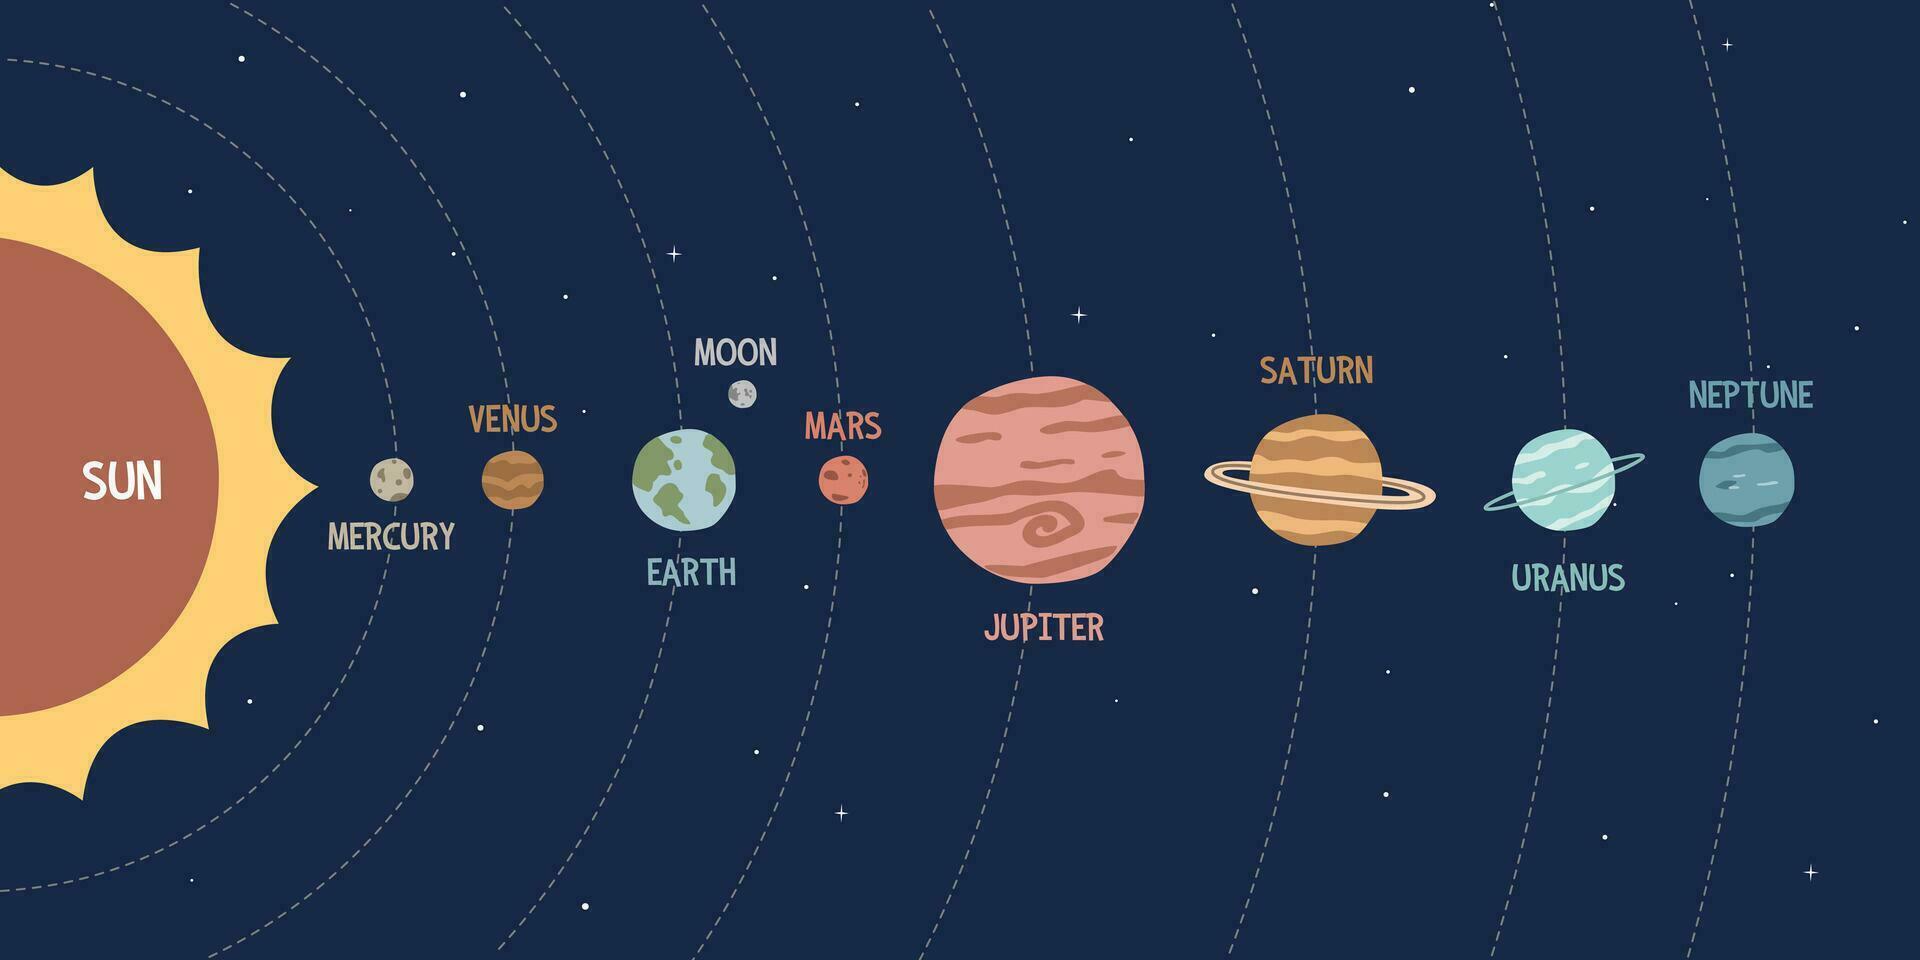 Solar- System Karikatur Clip Art. bunt Solar- System Planeten mit Umlaufbahnen eben Vektor Illustration Hand gezeichnet Stil. Sonne, Quecksilber, Venus, Erde, Mars, Jupiter, Saturn, Uranus, Neptun Planeten Clip Kunst